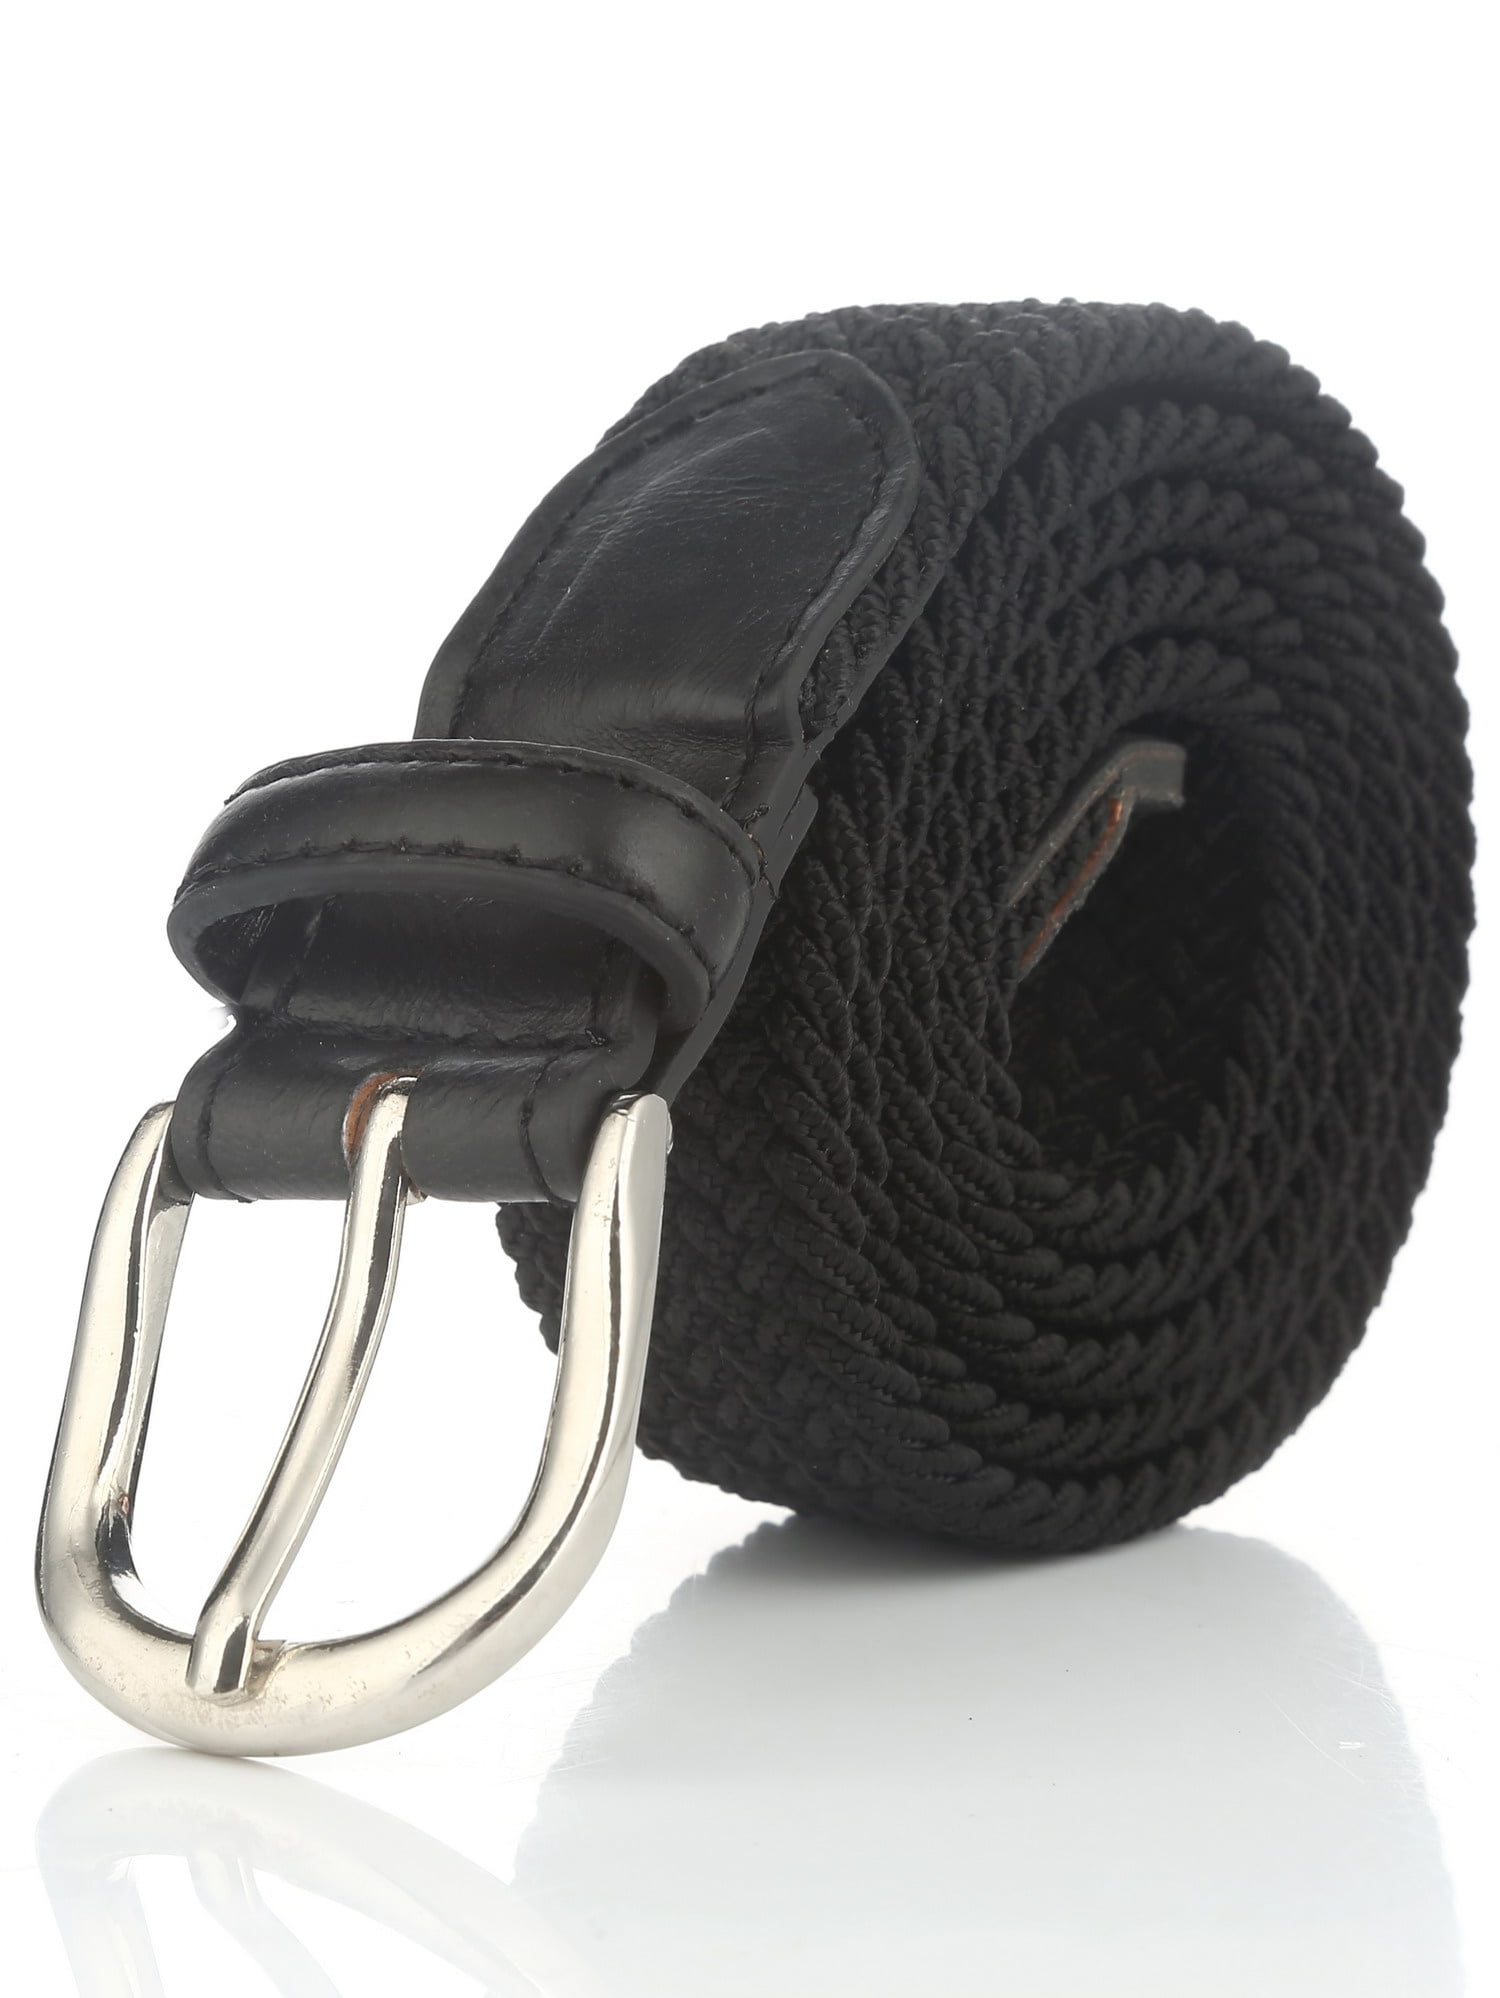 Gelante Children's Canvas Elastic Fabric Woven Stretch Braided Belts -Black-L (28-30)